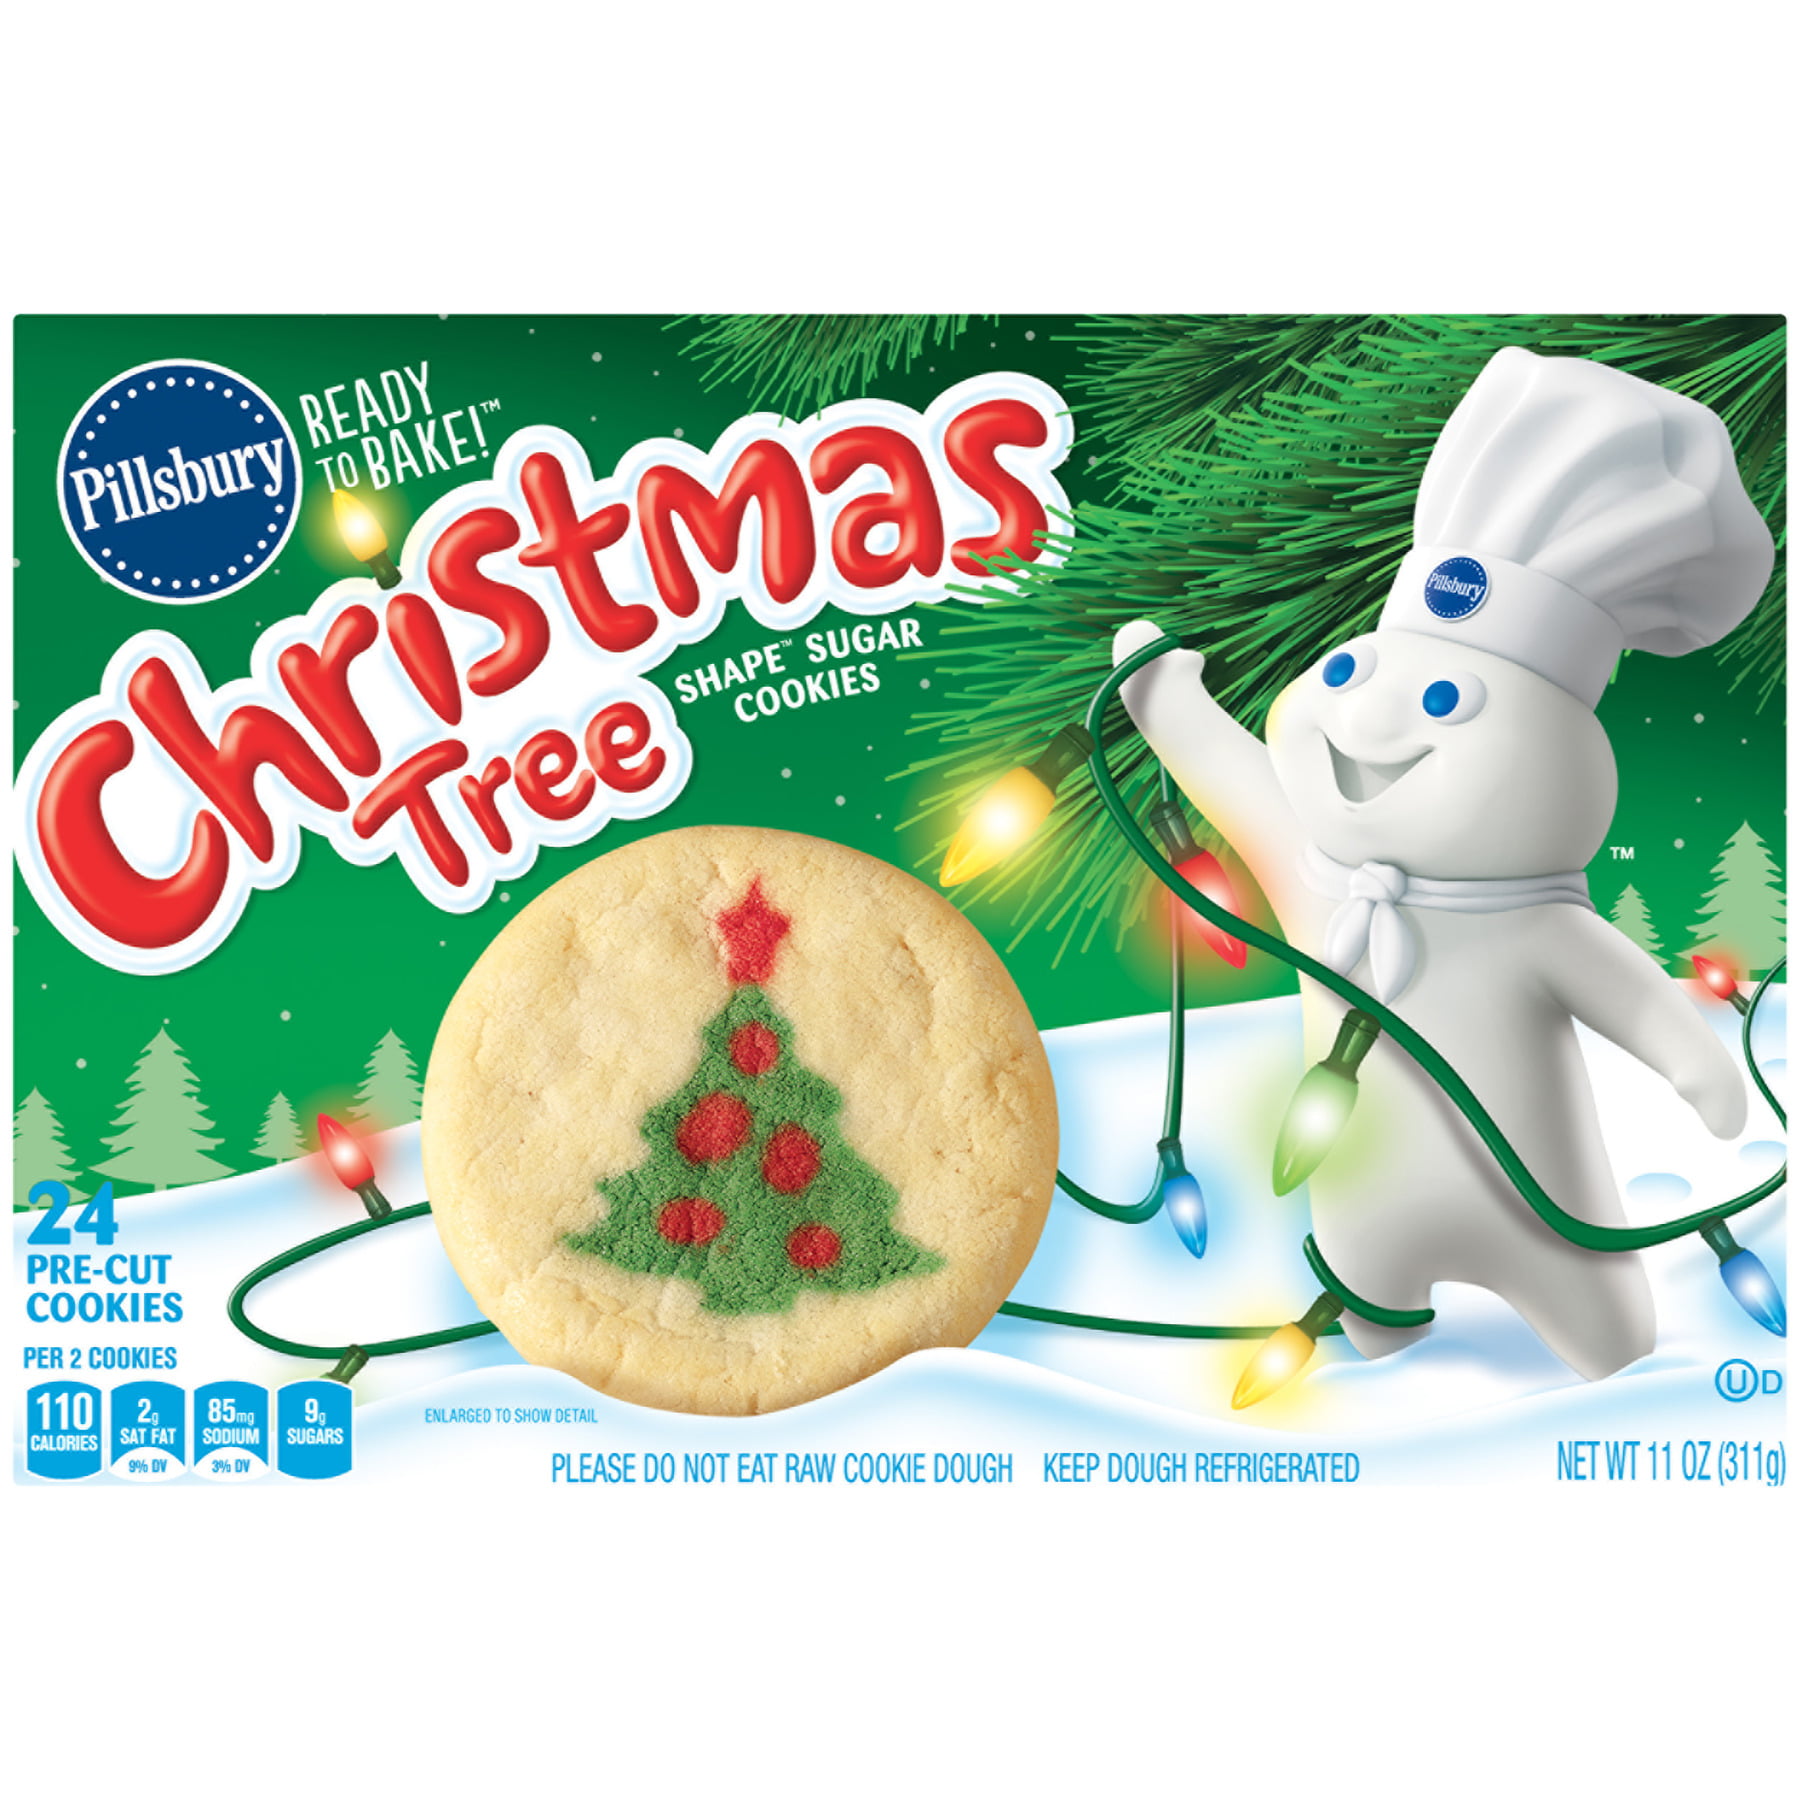 Pillsbury Christmas Tree Shape Sugar Cookies 11 Oz 24 Count Walmart Com Walmart Com